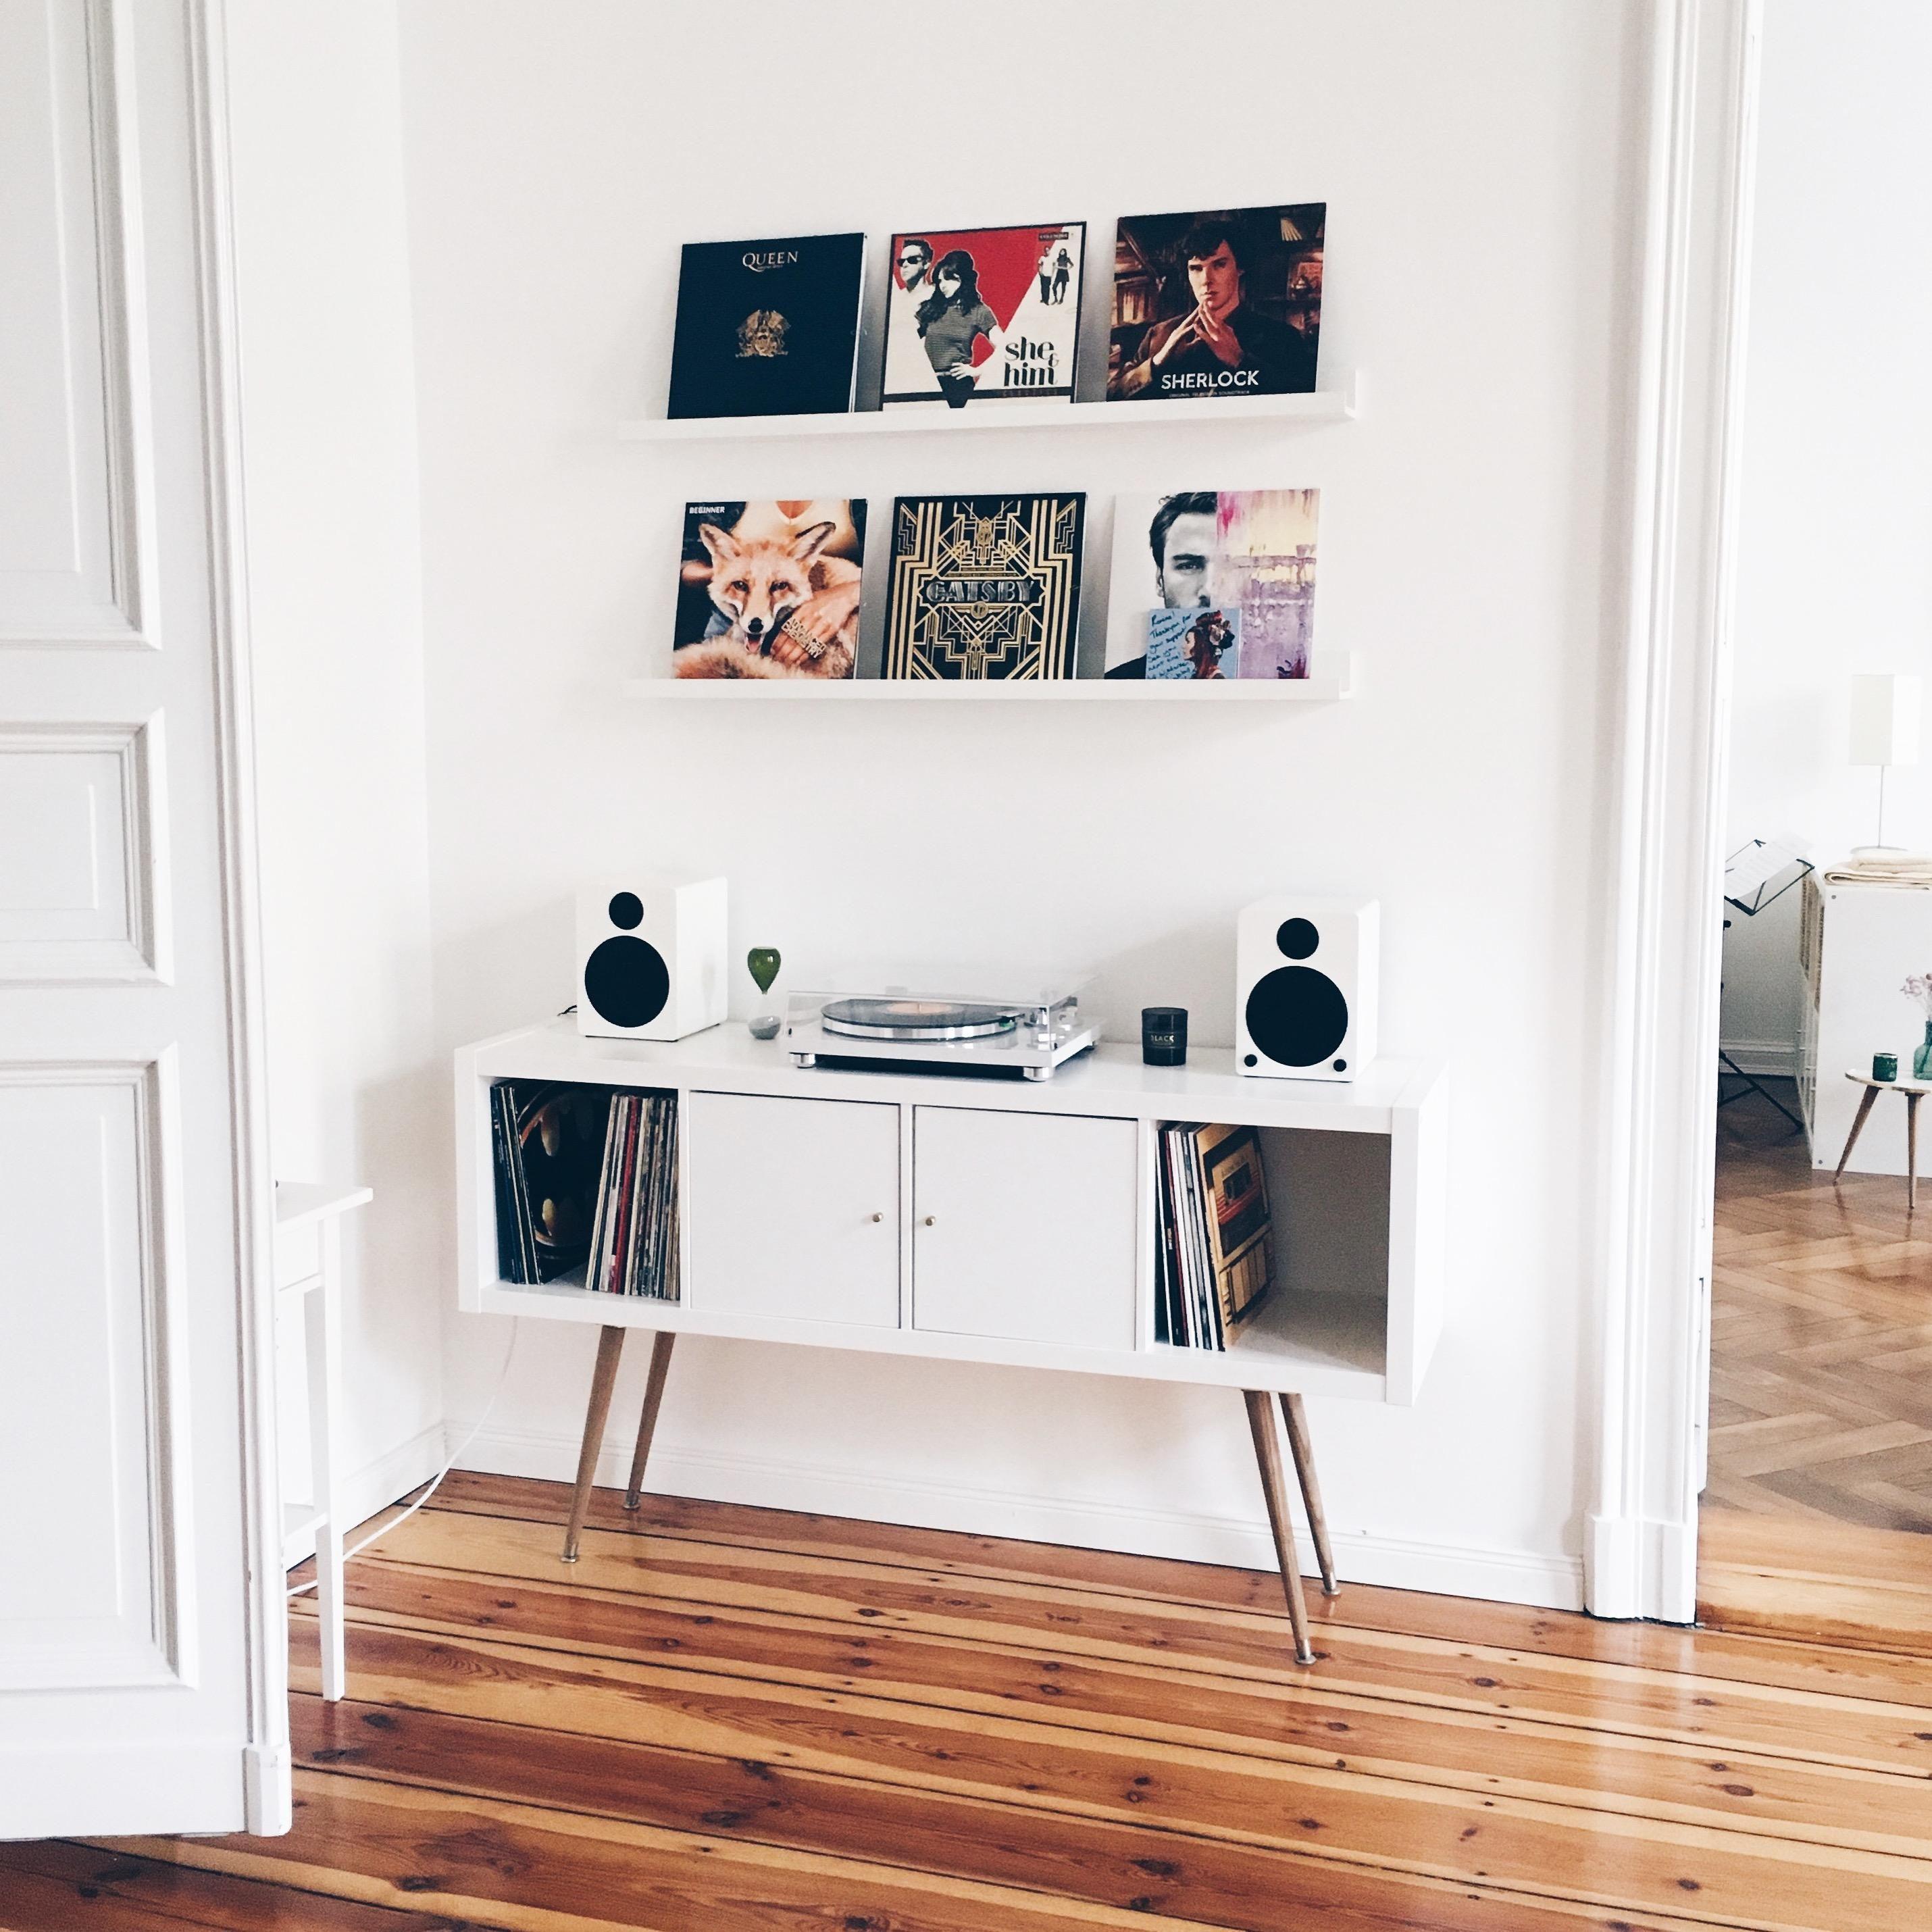 Vinyl-Love <3 #wohnzimmer #ikeahack #ikea #altbau #vinyllove #livingroom